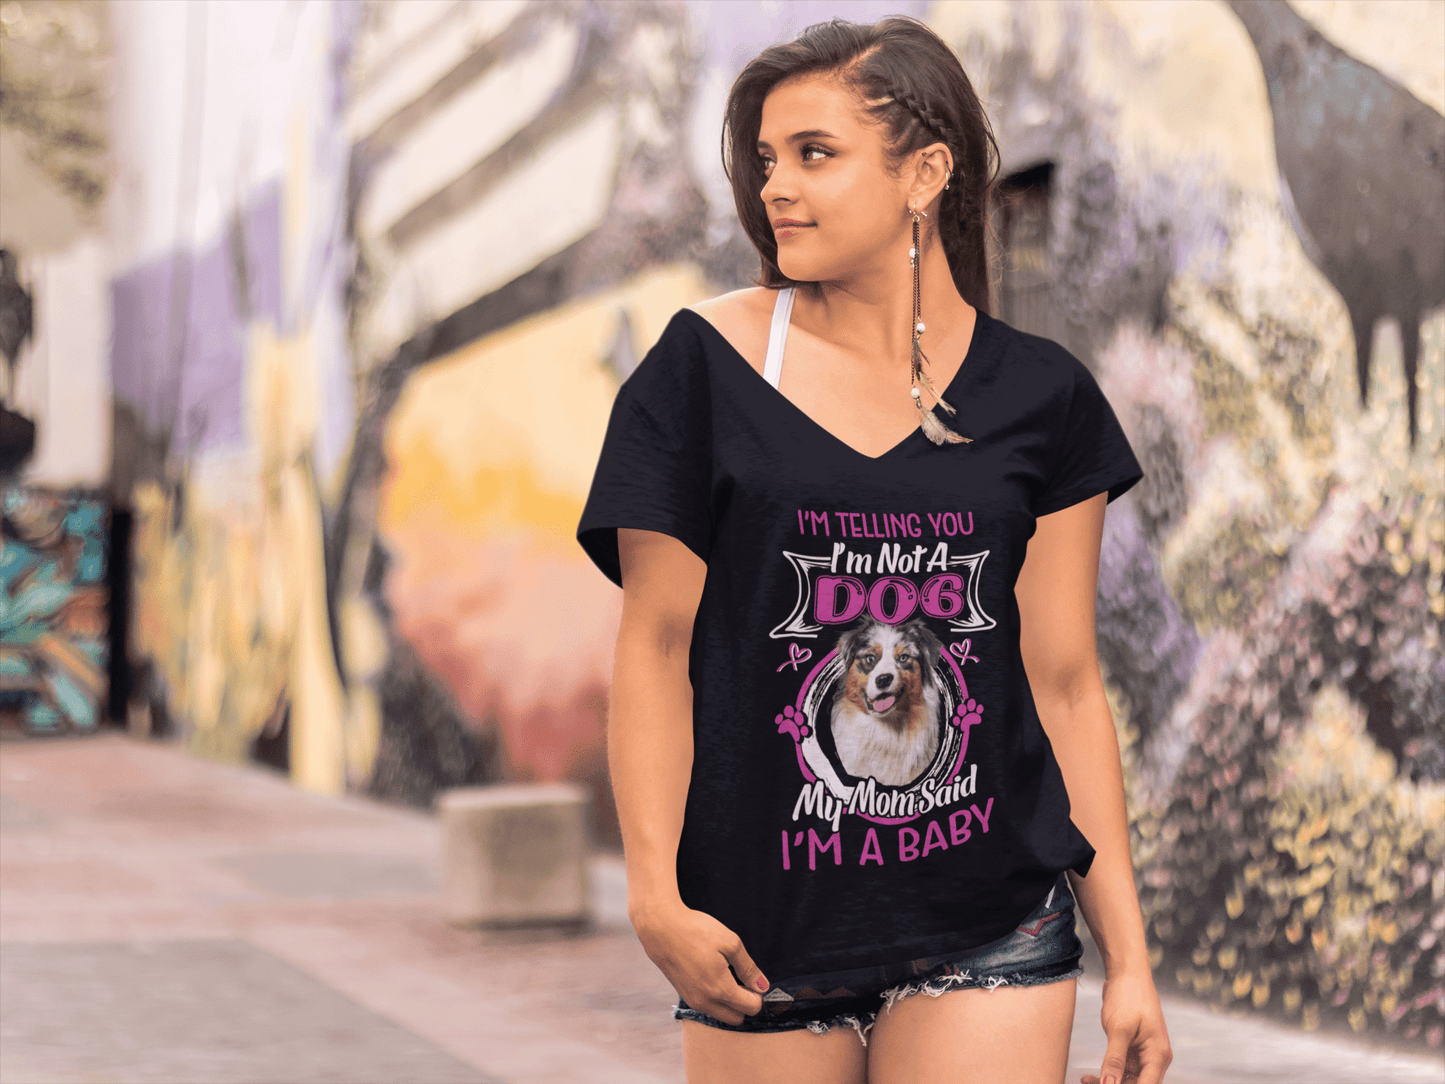 ULTRABASIC Women's T-Shirt I'm Telling You I'm Not a Australian Shepherd - My Mom Said I'm a Baby - Cute Puppy Dog Lover Tee Shirt